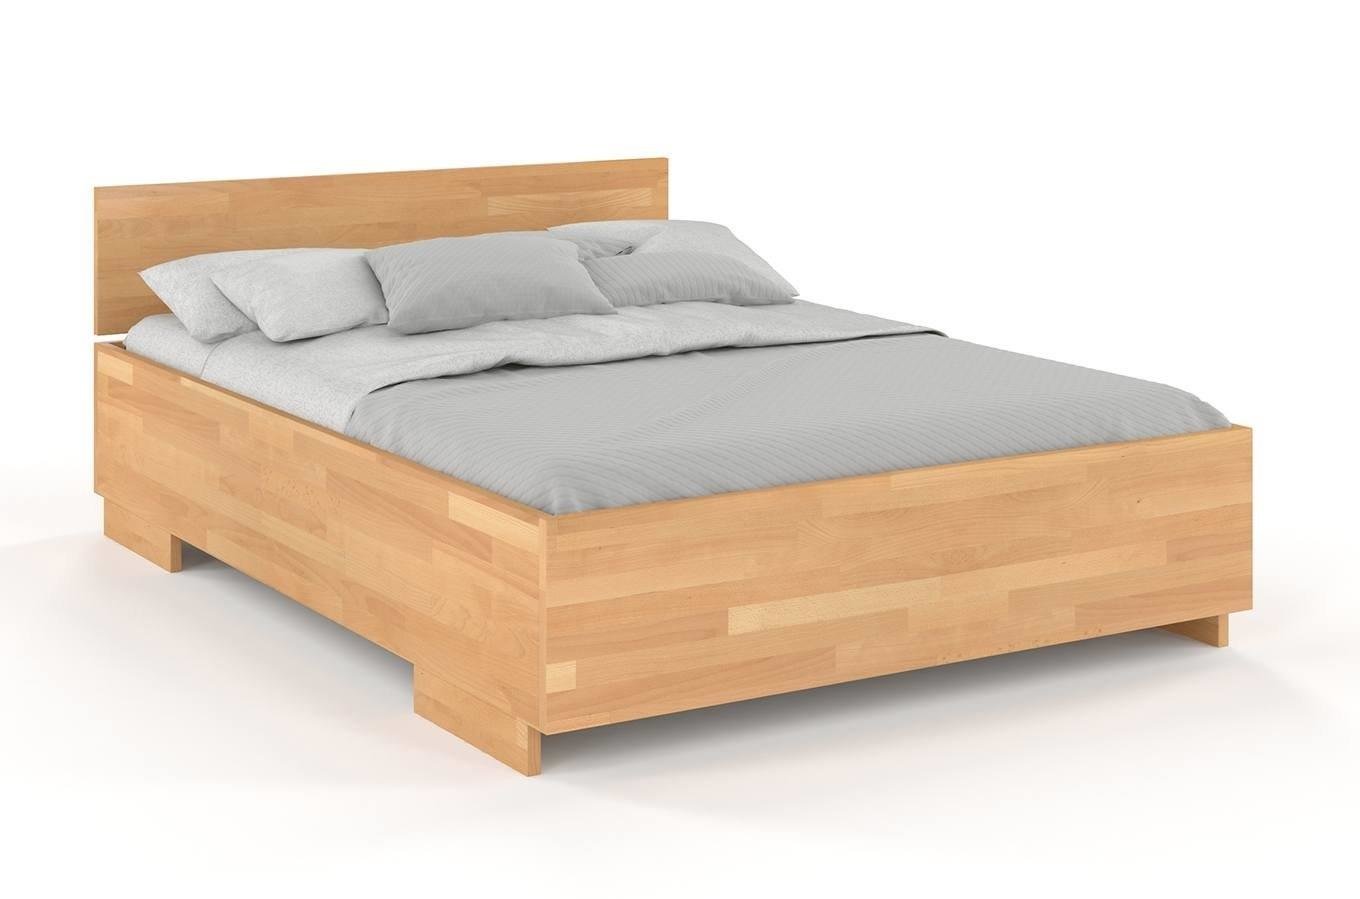 Łóżko drewniane bukowe Visby Bergman High / 140x200 cm, kolor naturalny